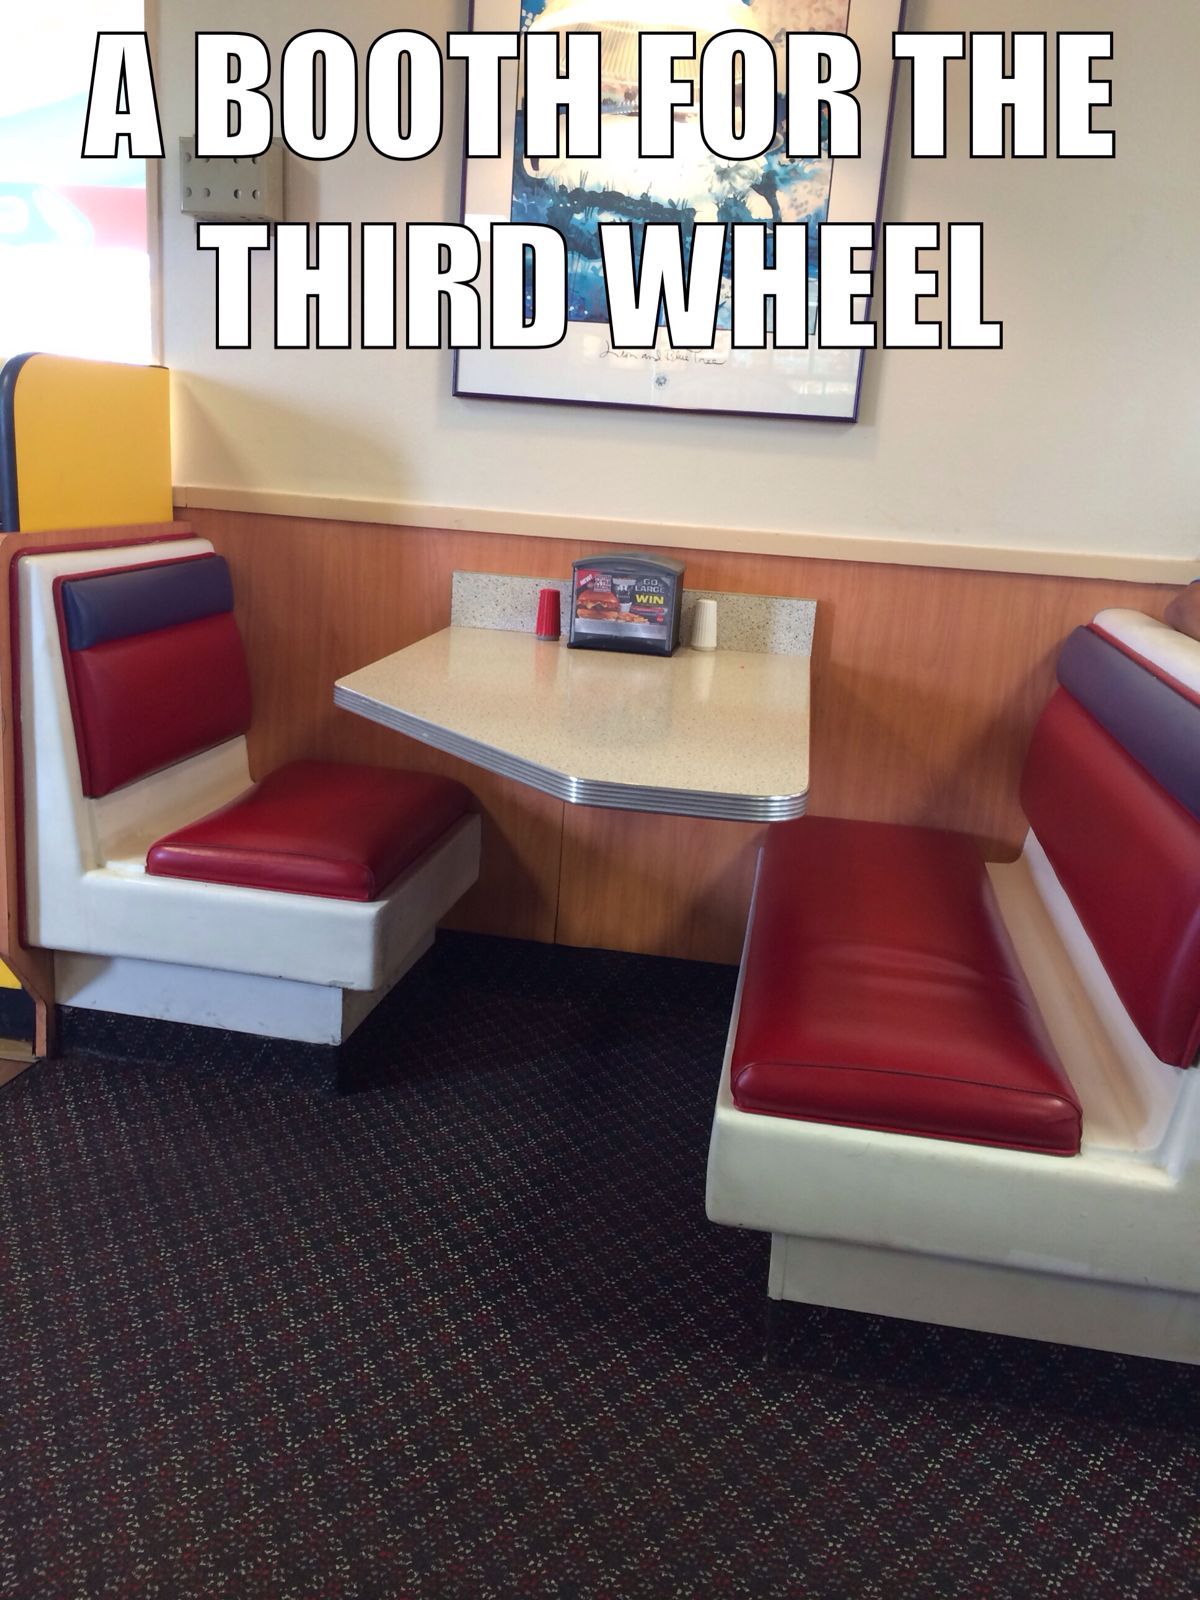 The third wheel booth - meme